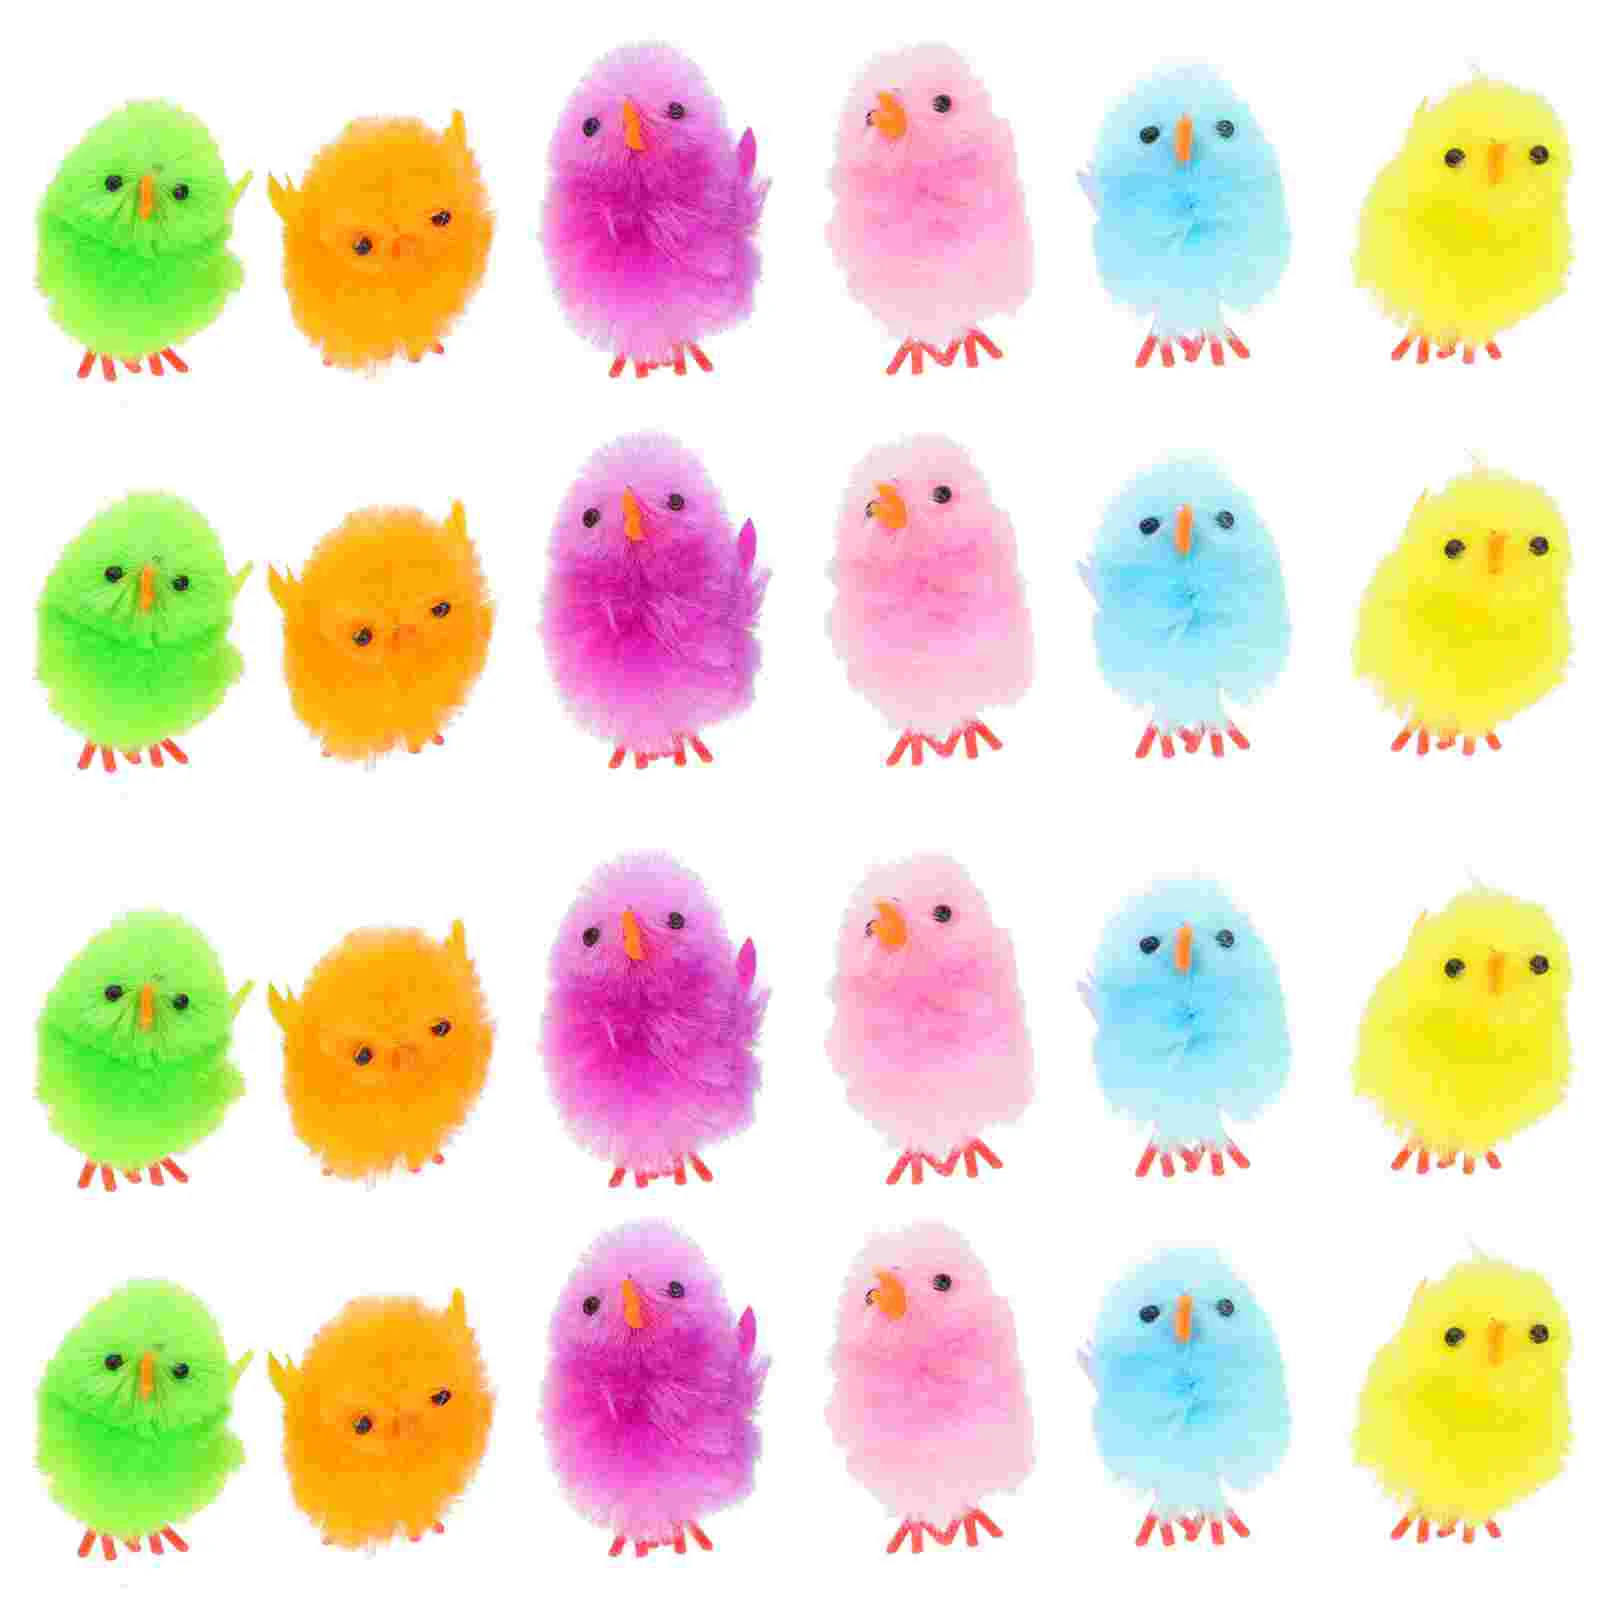 

Easter Chicks Chicken Chick Ornament Decor Party Mini Desktop Fluffy Fake Decorative Decoration Prop Coloured Simulation Plush